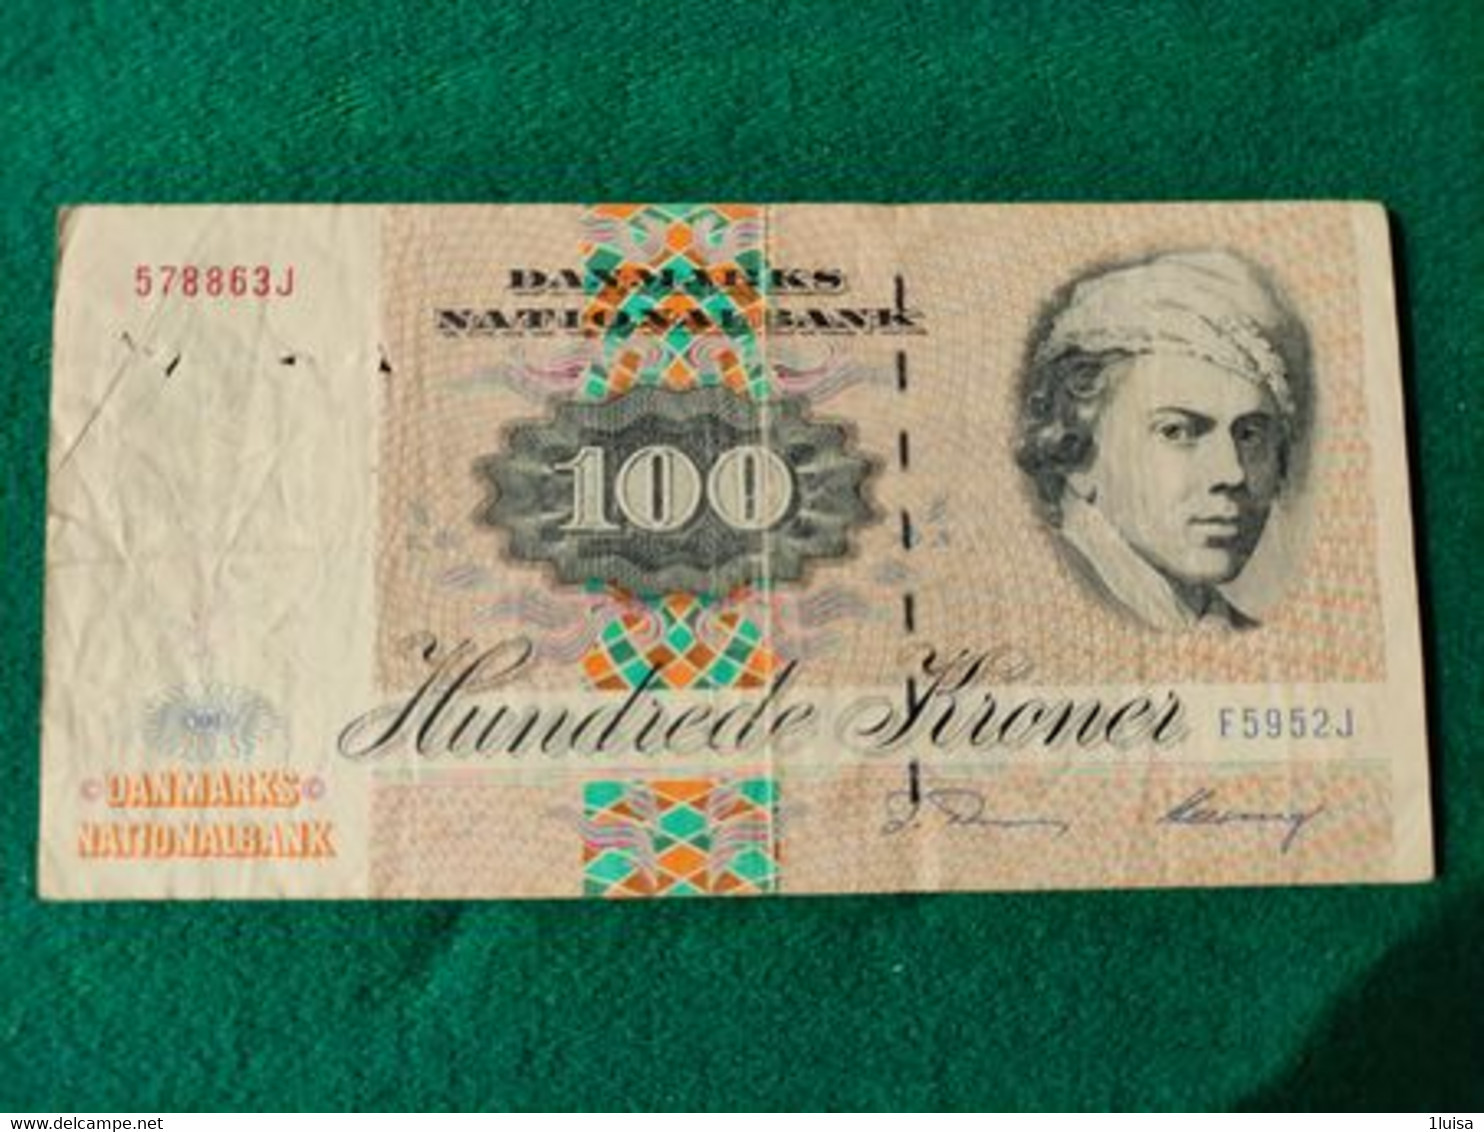 Danimarca 100 Kroner 1972 - Danemark